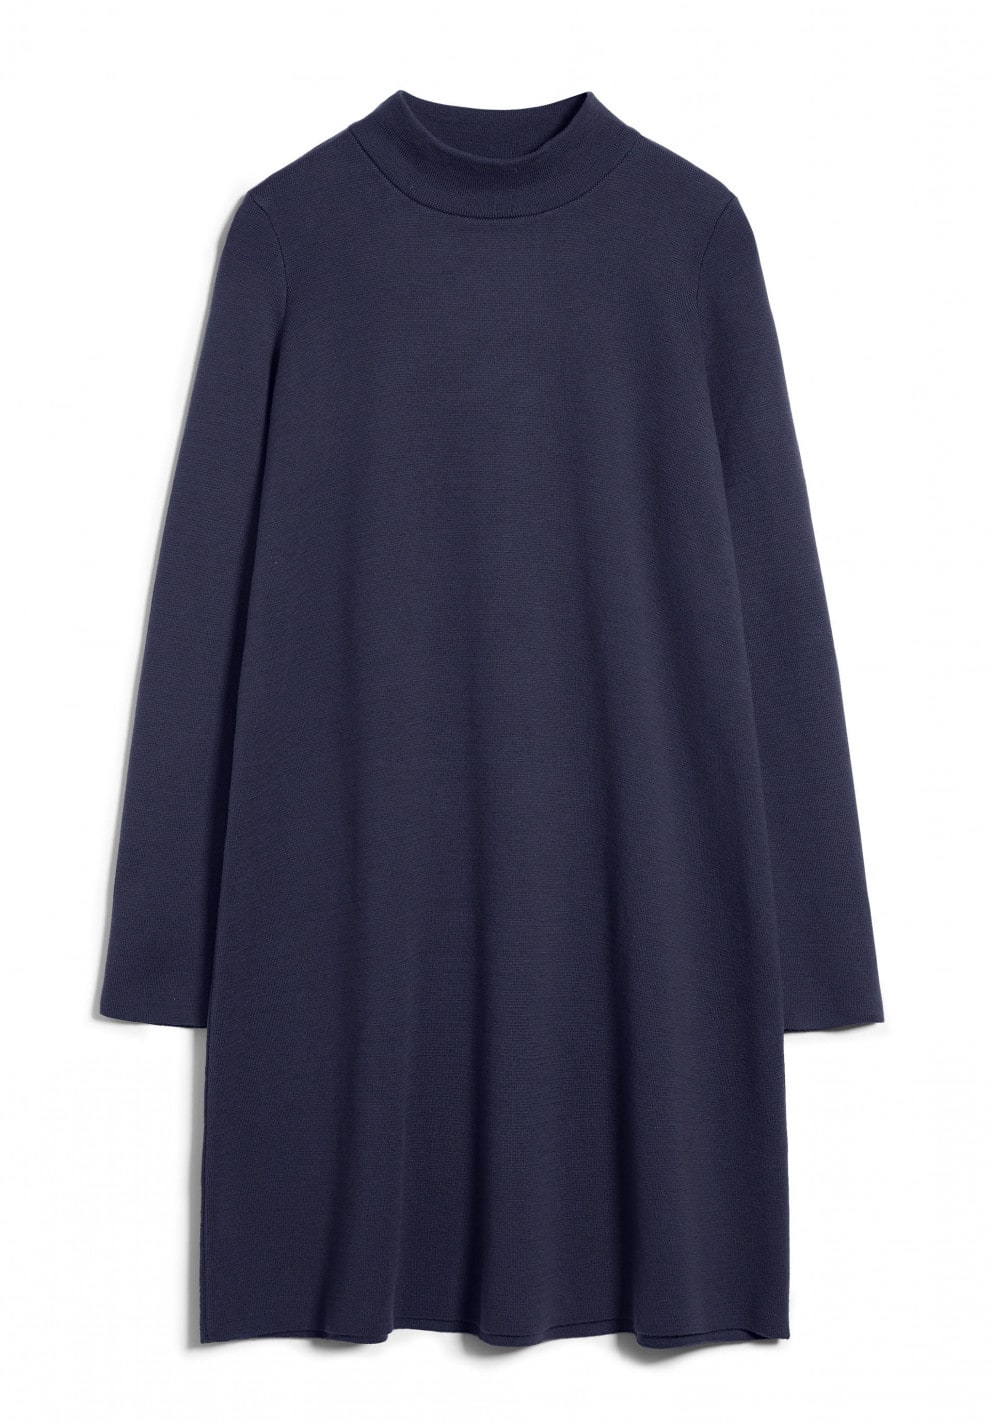 FRIADAA Night Sky Blue Knitted Dress 100% Organic Cotton